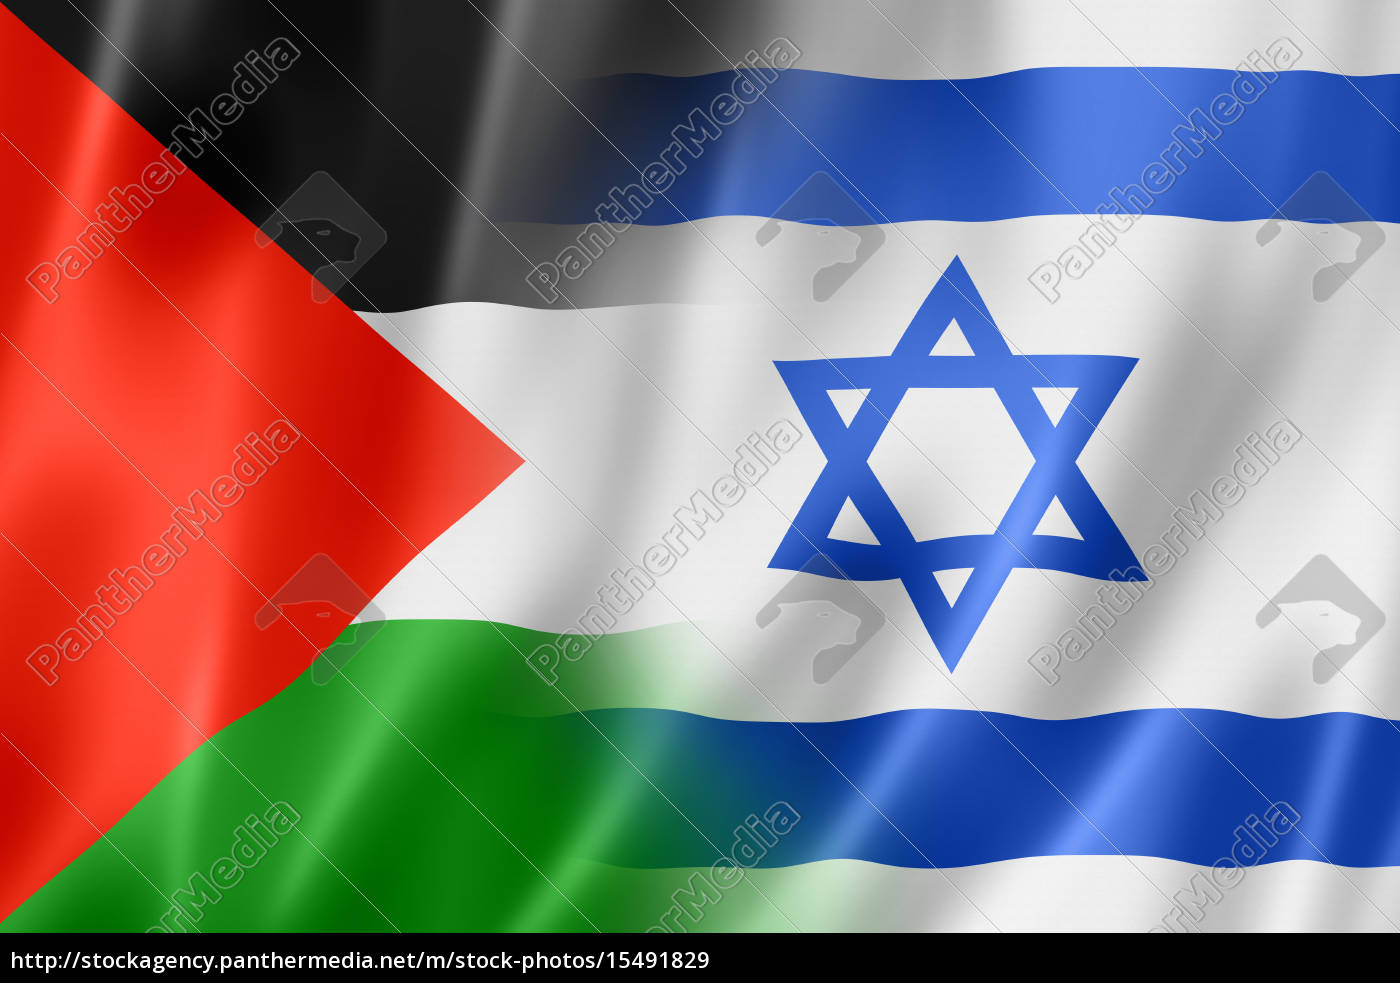 https://mh-1-stockagency.panthermedia.net/media/previews/0015000000/15491000/~palestine-and-israel-flag_15491829_high.jpg